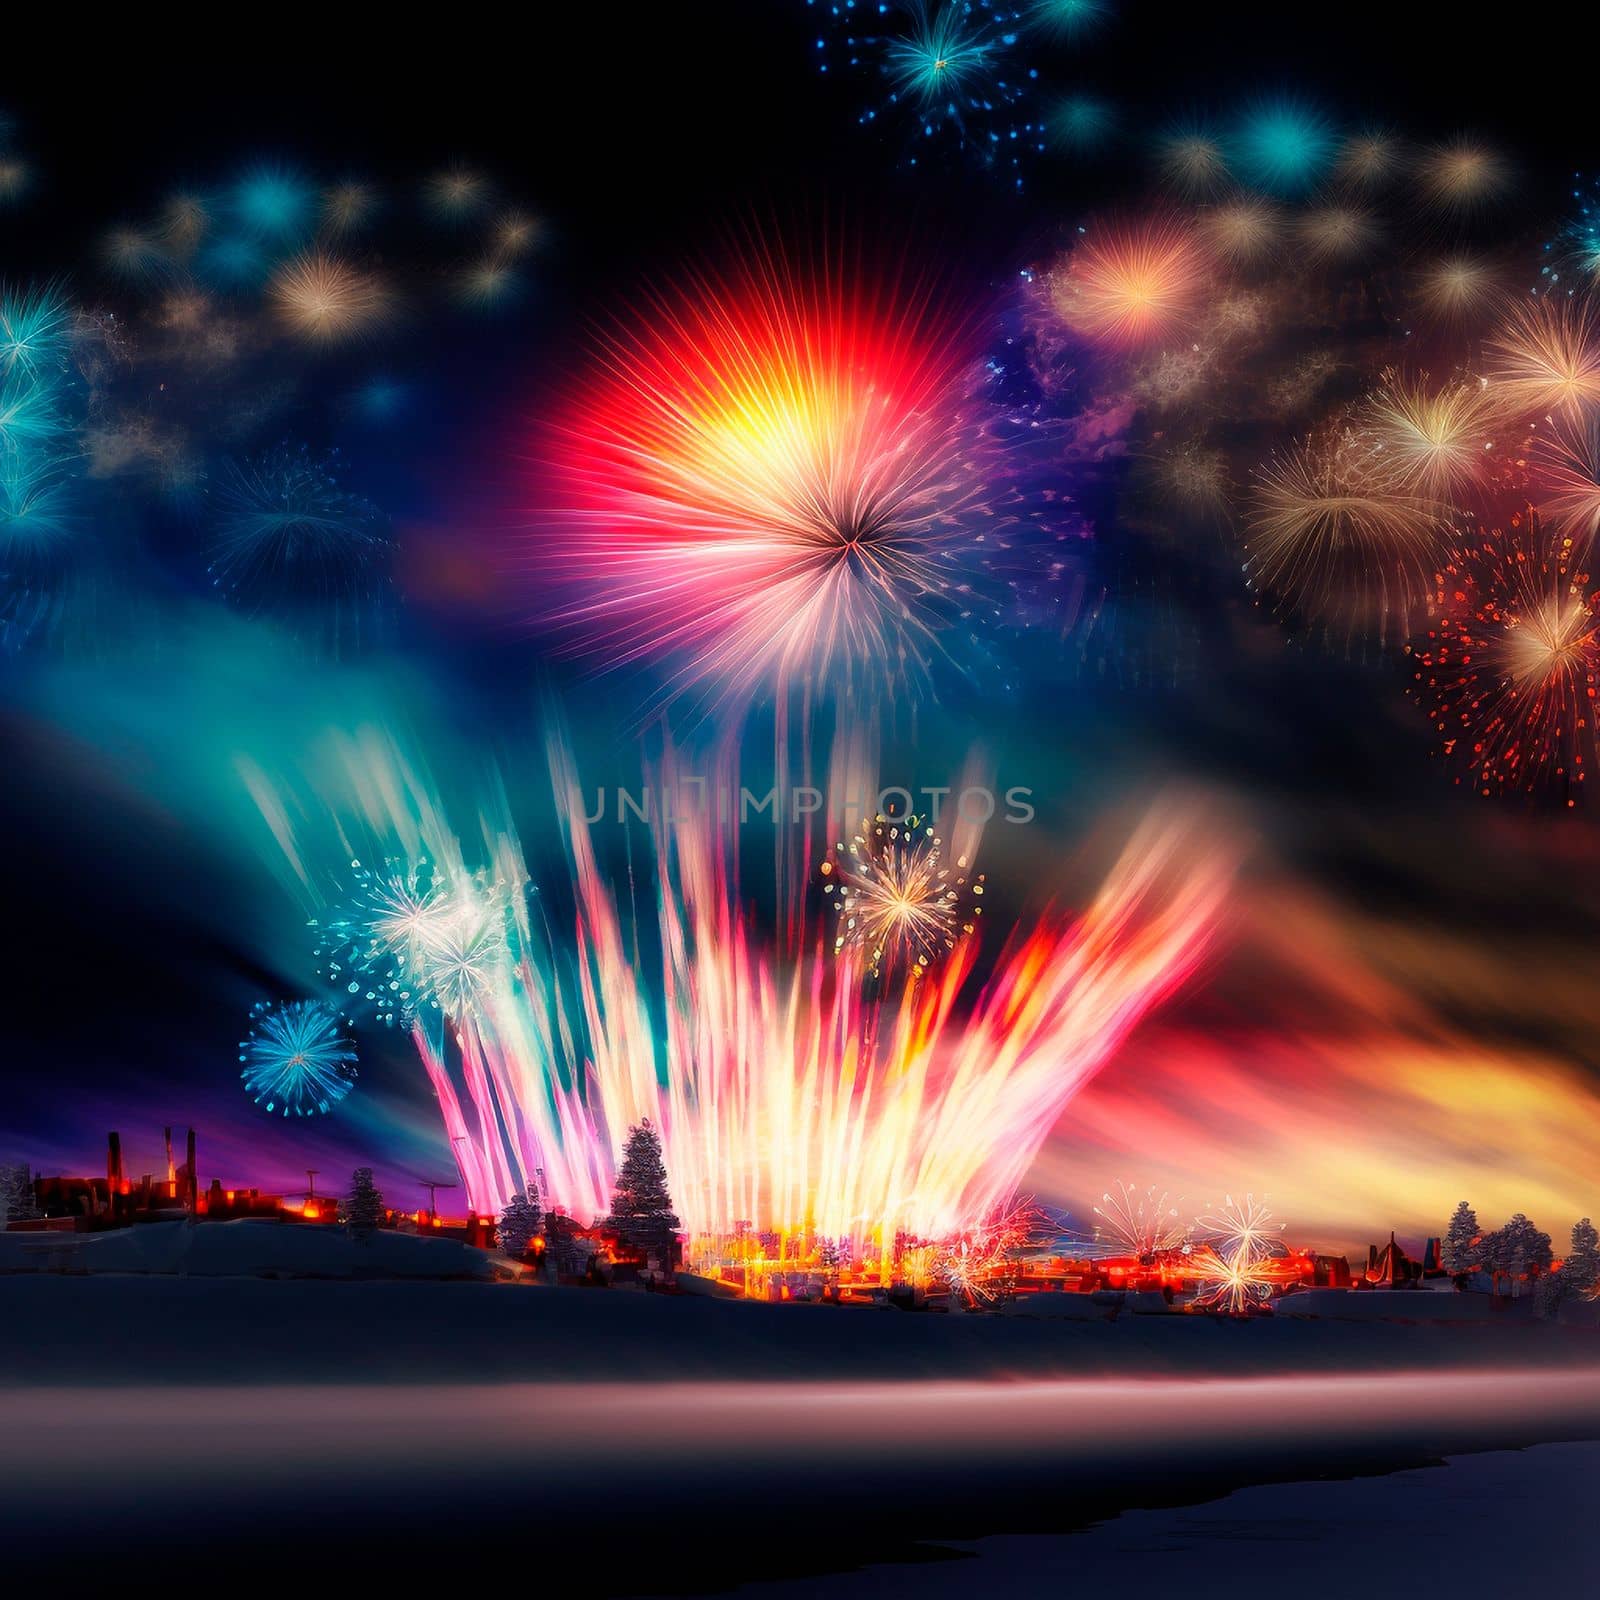 Bright night sky with fireworks by NeuroSky